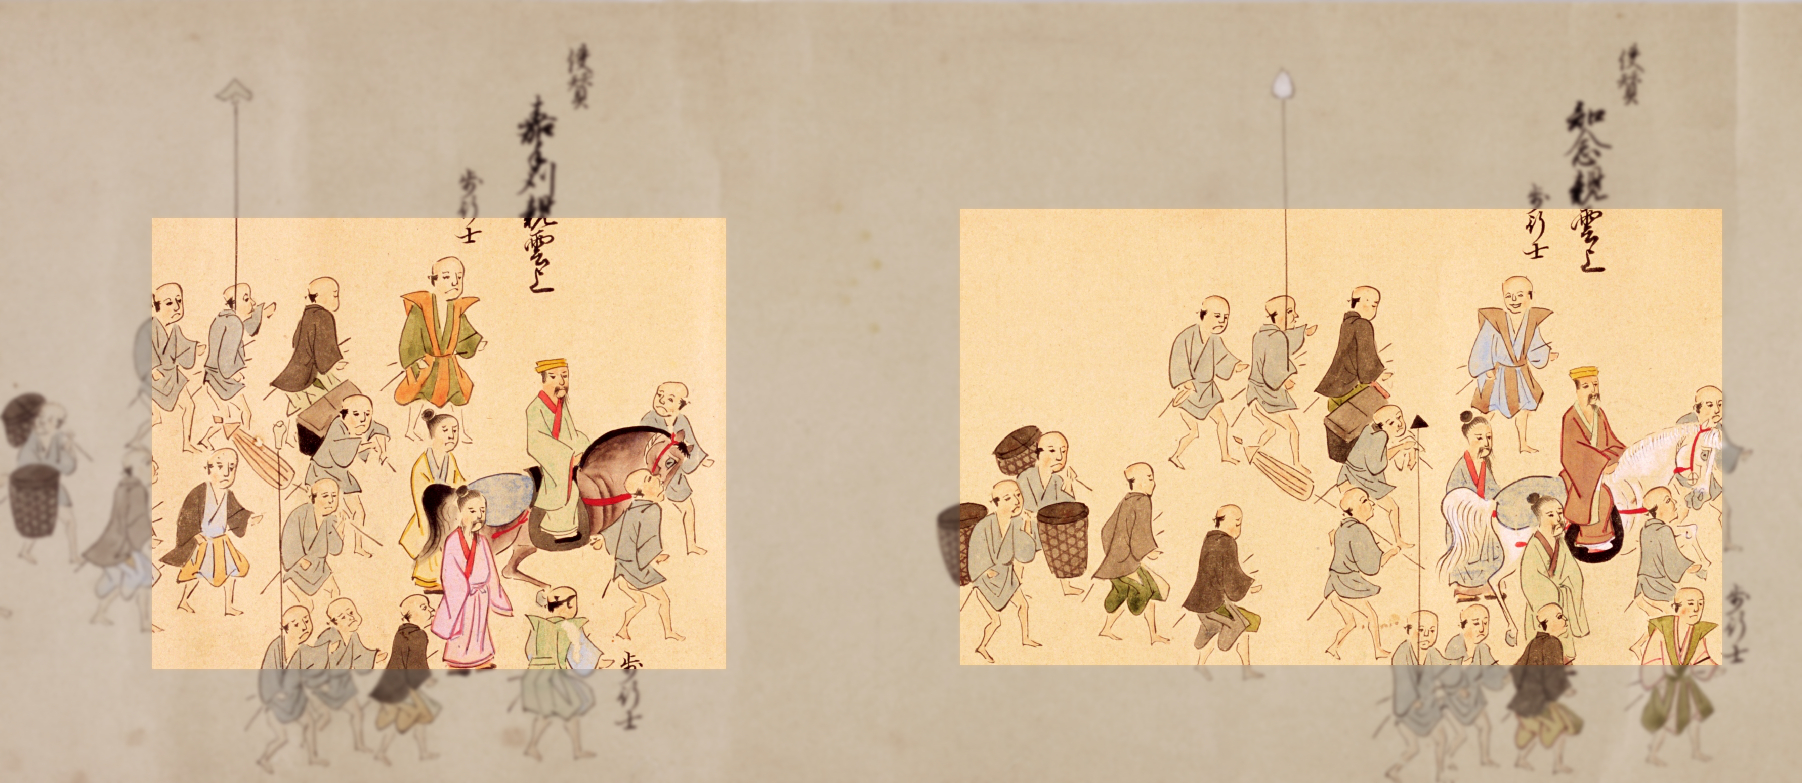 1710, Kadekari Pechin and Chinen Pechin as Shisan. Japan National Archives.